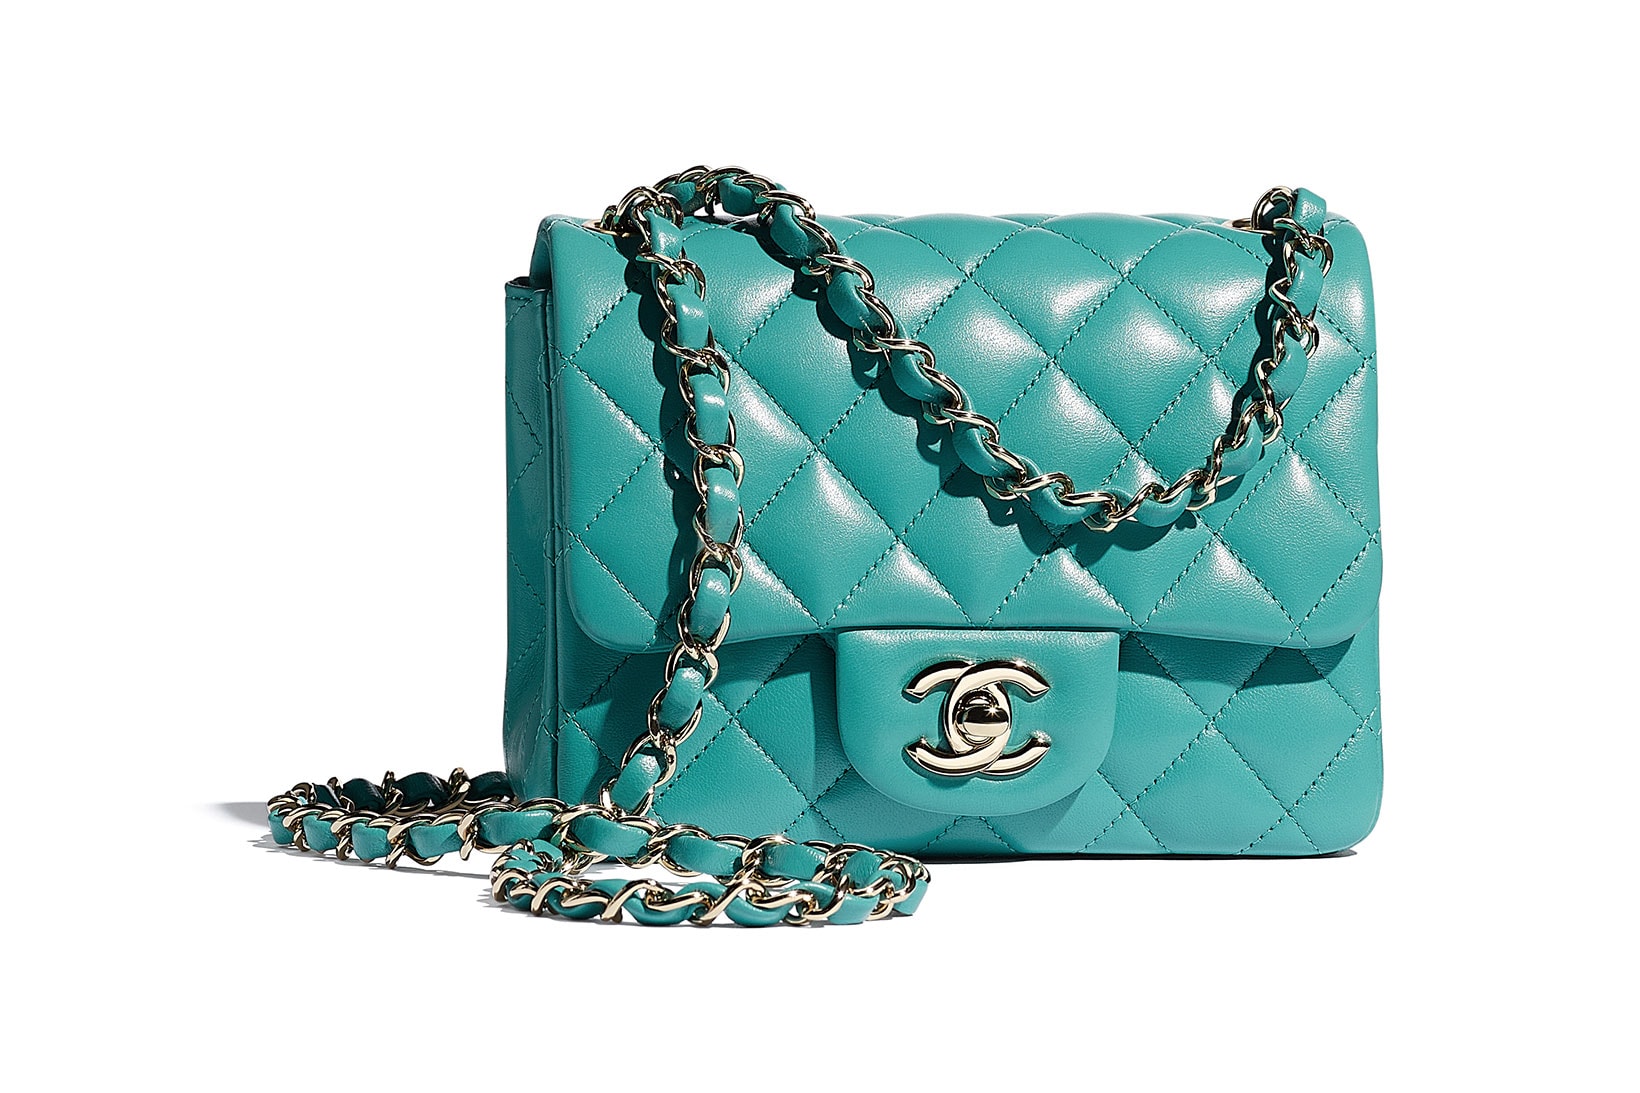 Studio Blog: Style inspo, The Chanel Brooch